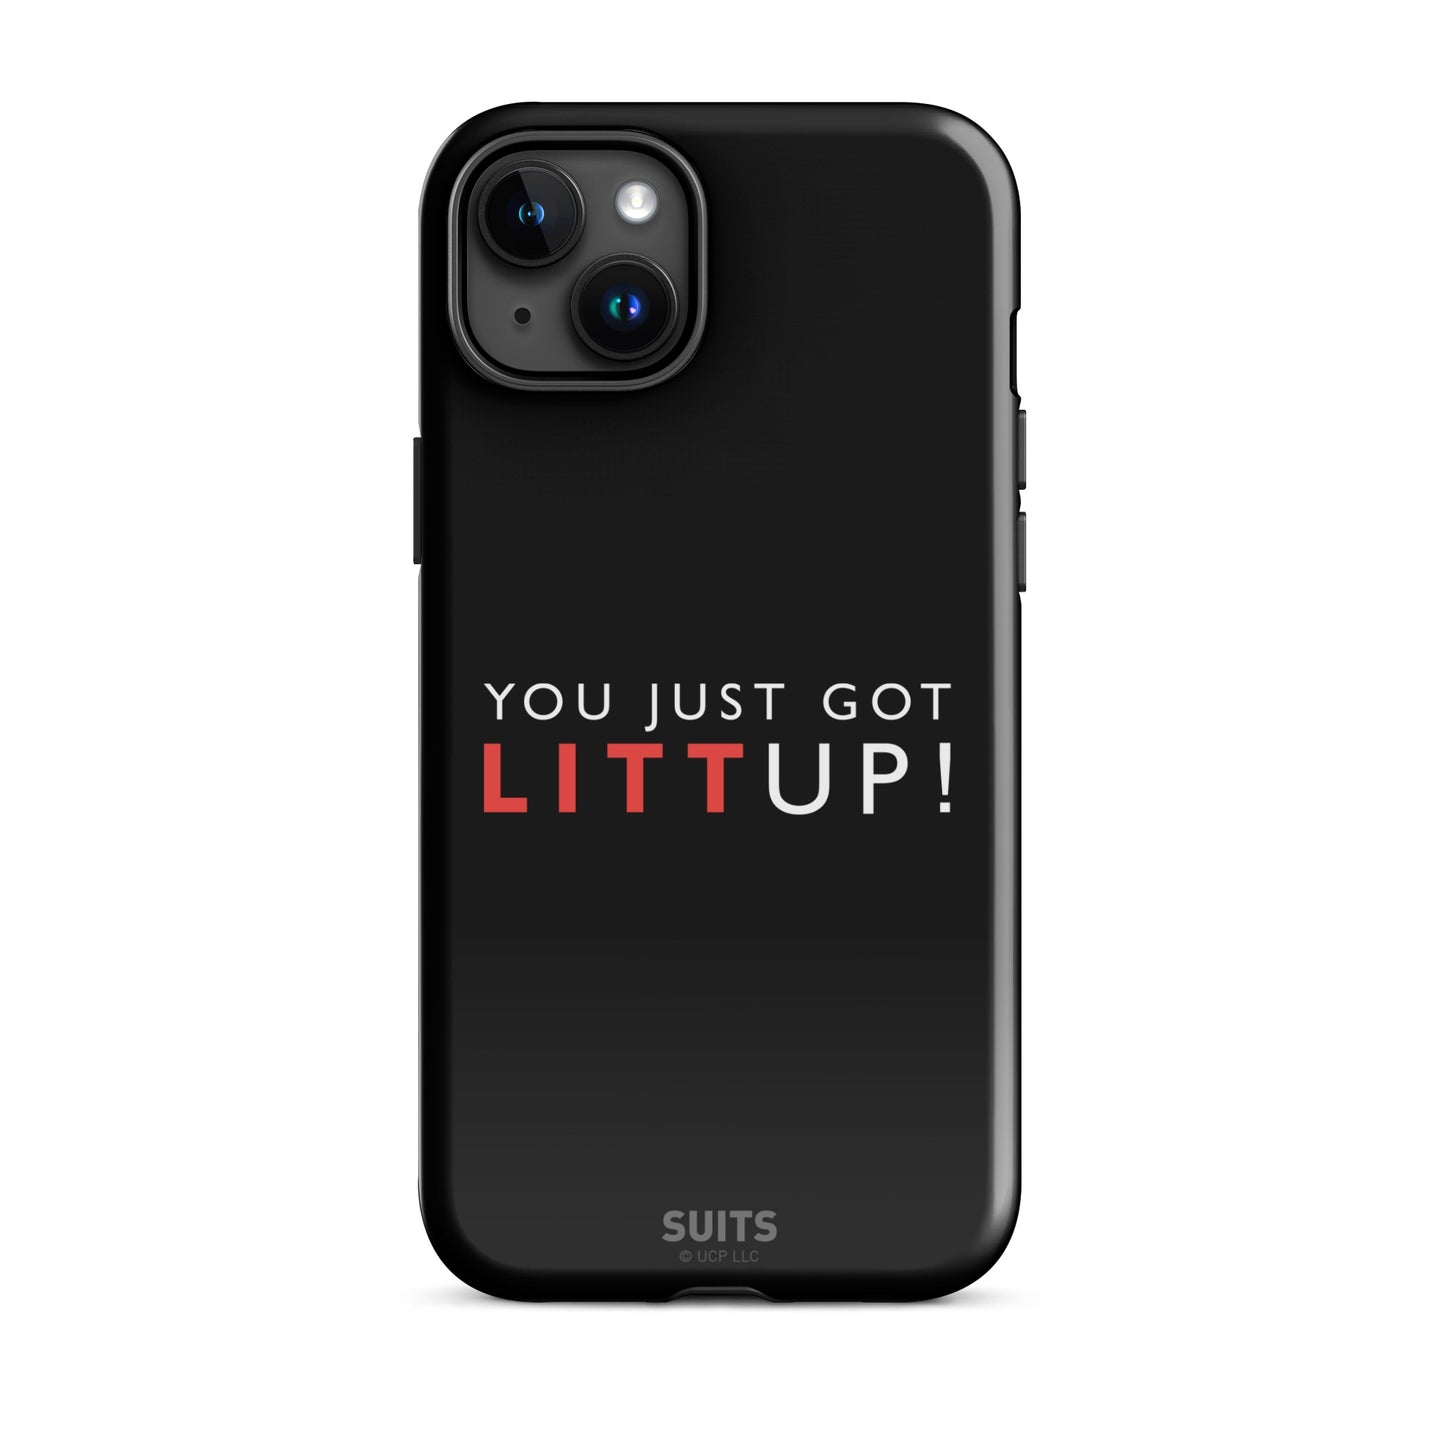 Suits Litt Up Tough Phone Case - iPhone